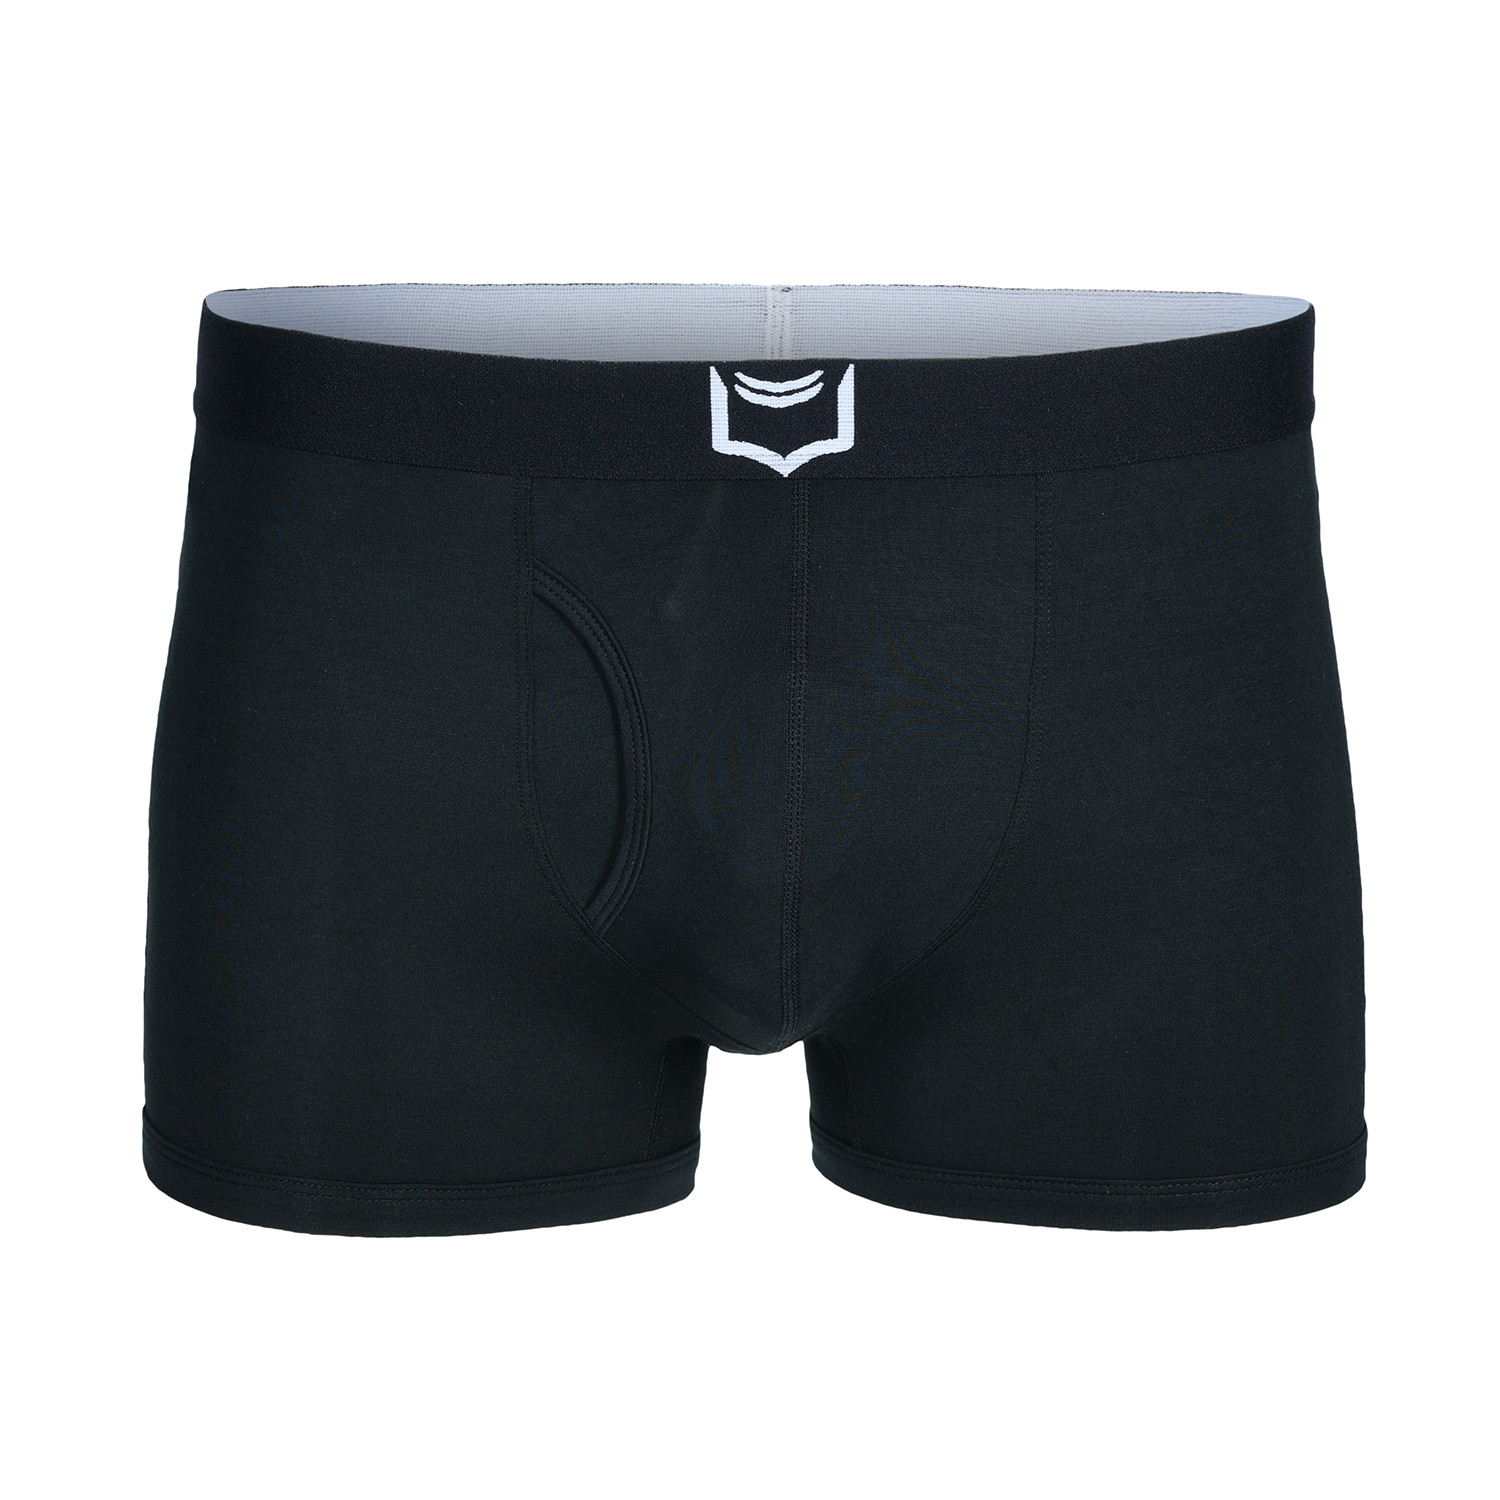 SHEATH 2.1 Men's Dual Pouch Trunks // Black (M) - Sheath Underwear ...